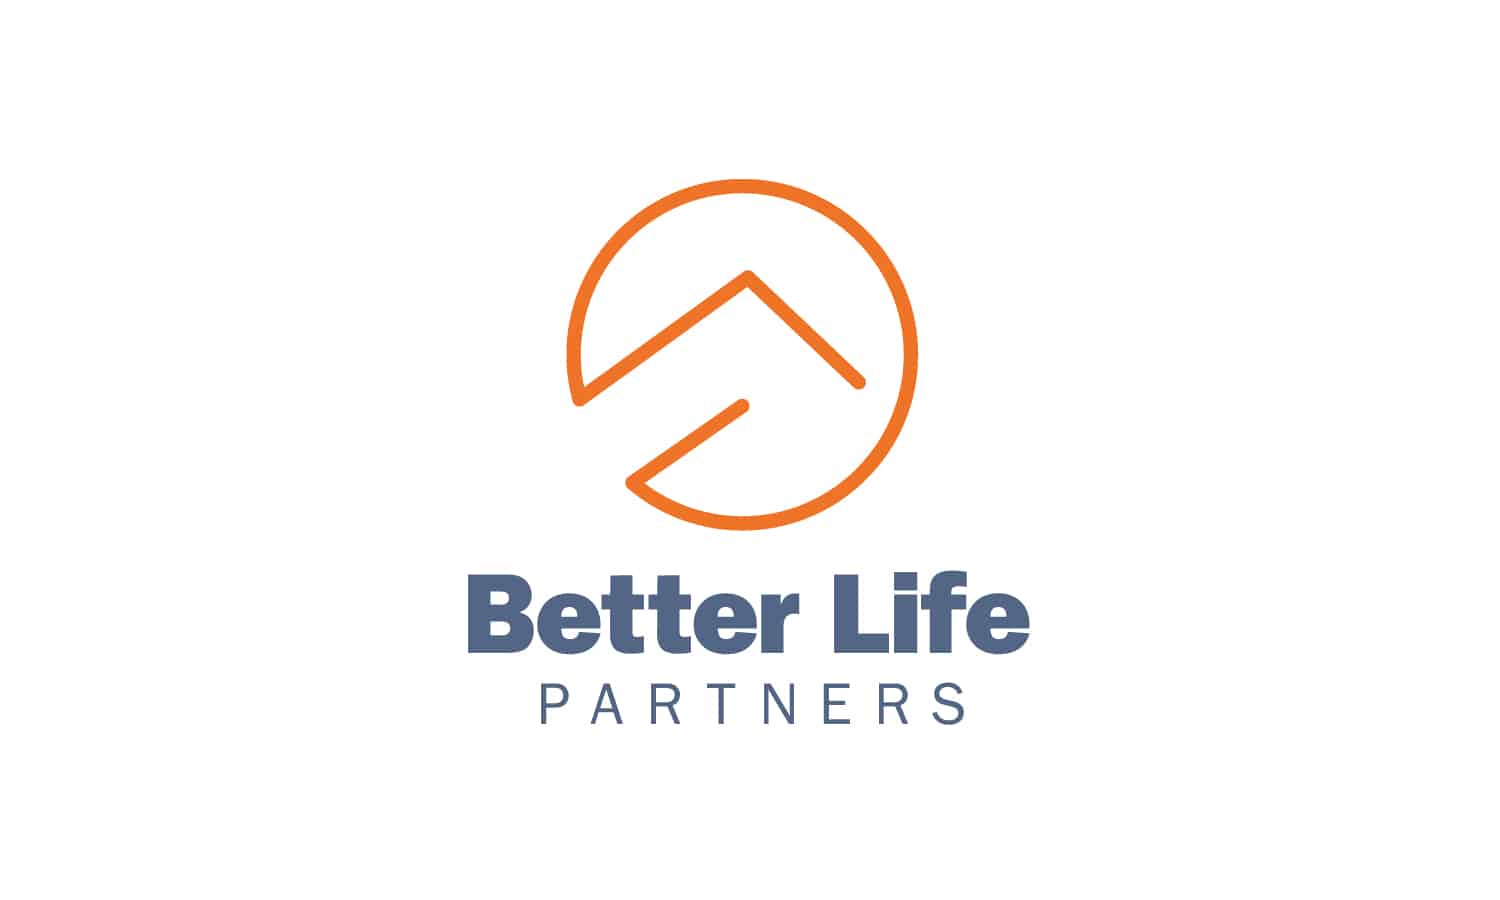 ATTACHMENT DETAILS Better-Life-Partners-Logo.jpg November 16, 2018 104 KB 1500 × 900 Edit Image Delete Permanently URL https://www.huckleberrybranding.com/wp-content/uploads/2018/11/Better-Life-Partners-Logo.jpg